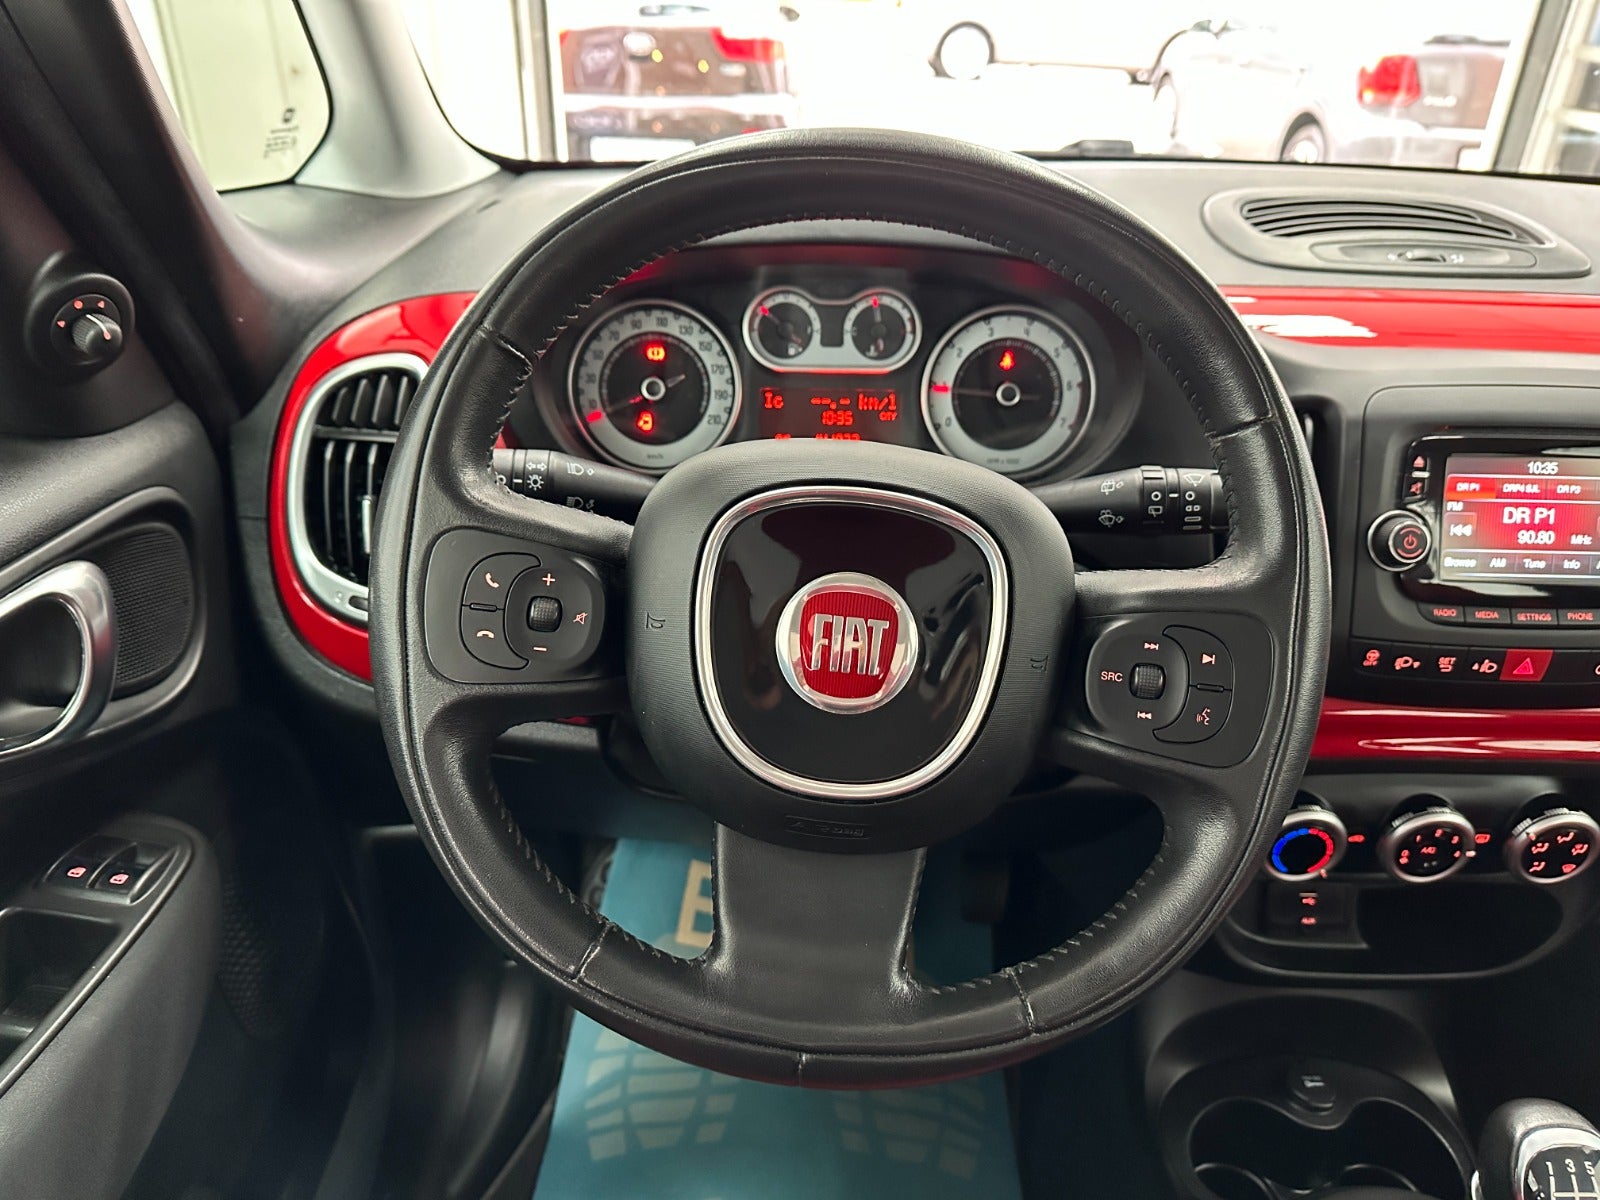 Fiat 500L 1,4 16V 95 Popstar Benzin modelår 2013 km 142000